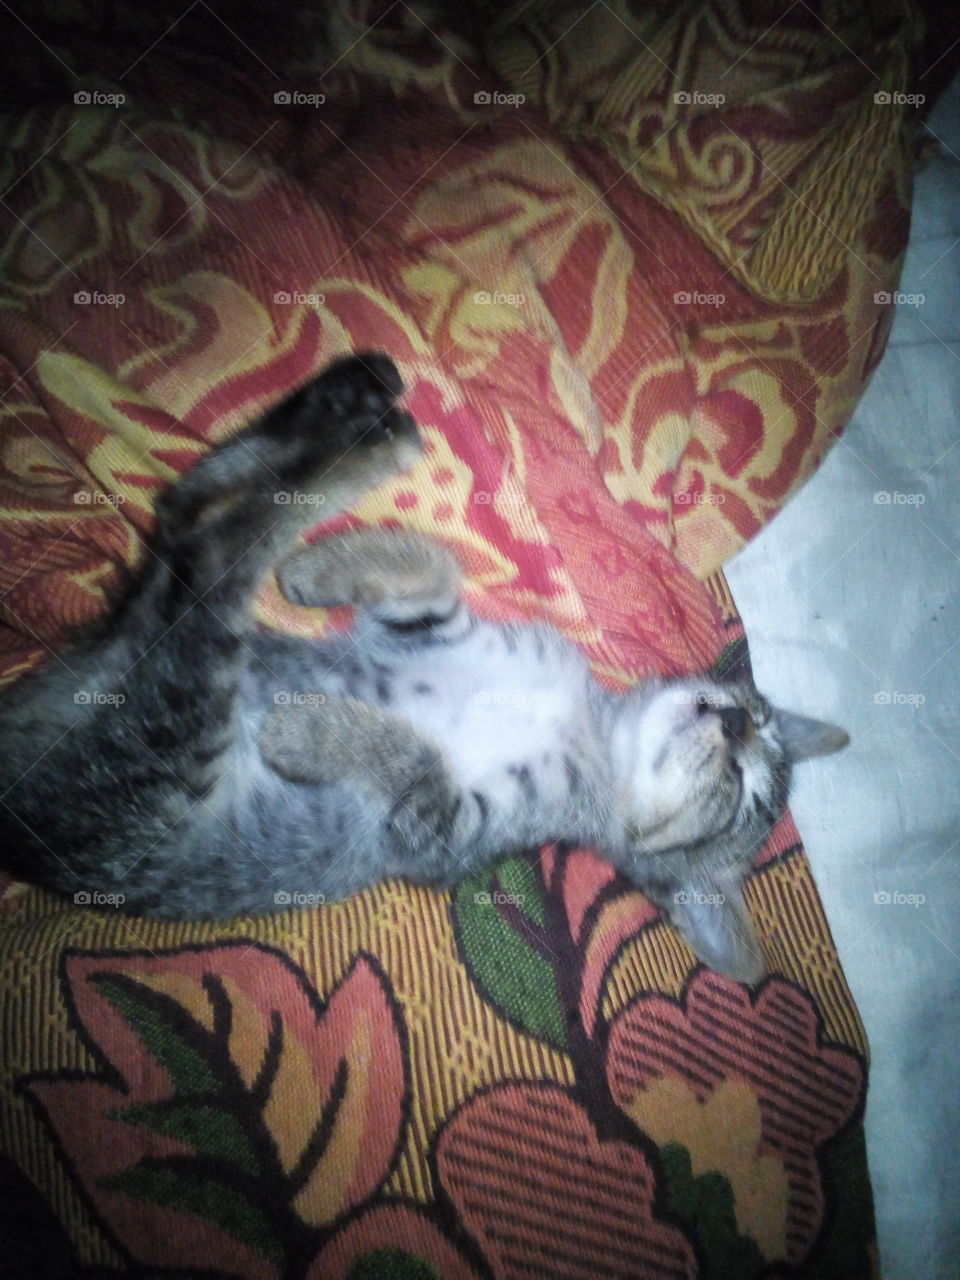 Cute kitten position while sleeping